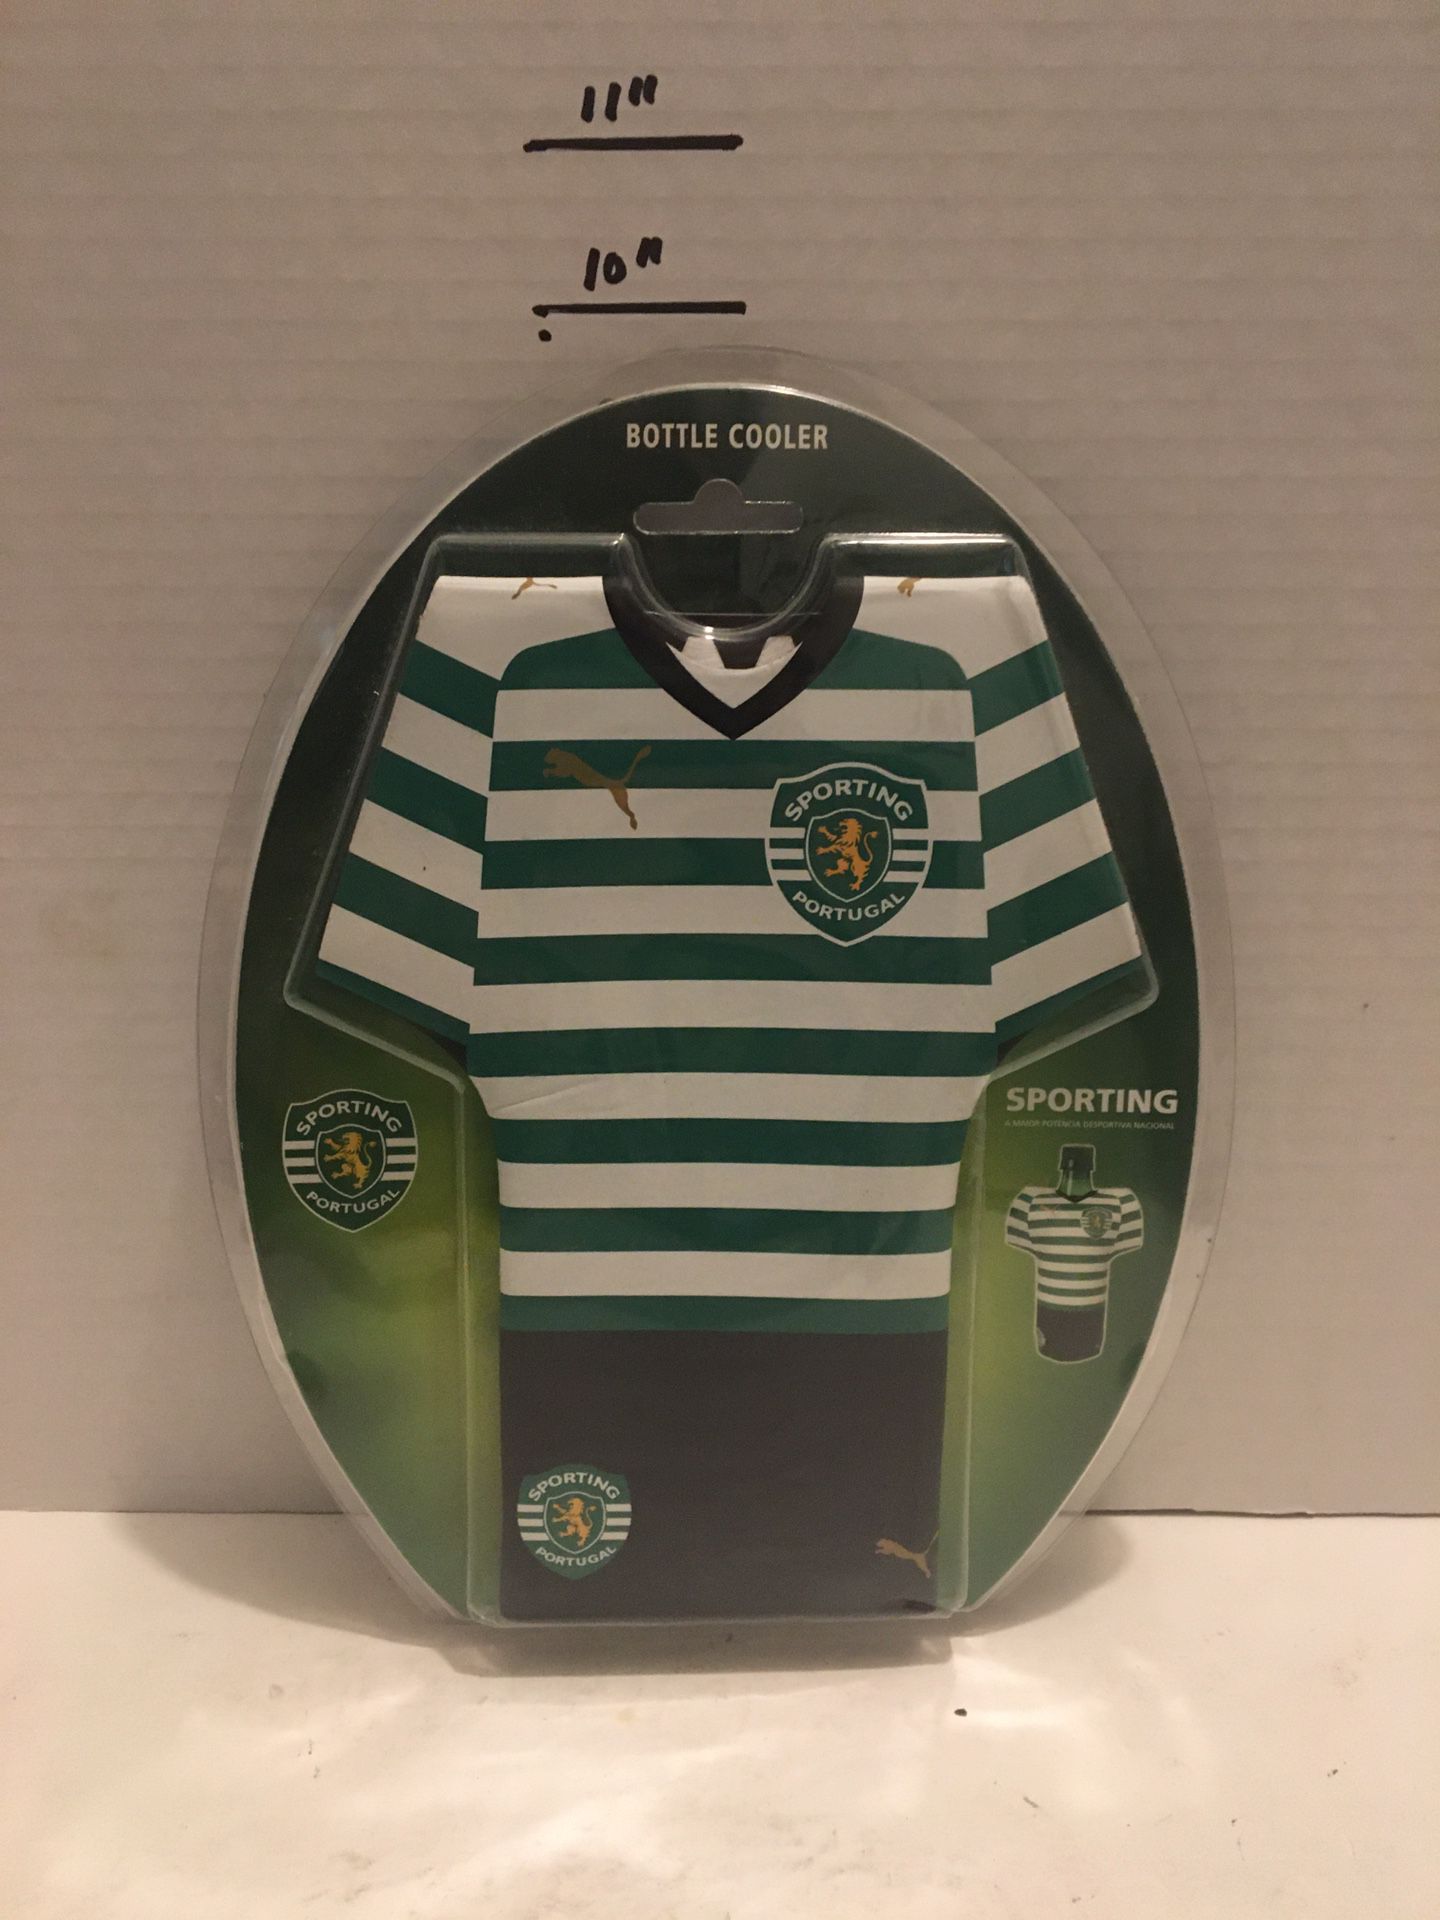 Sporting Portugal Bottle Cooler UEFA champions League 